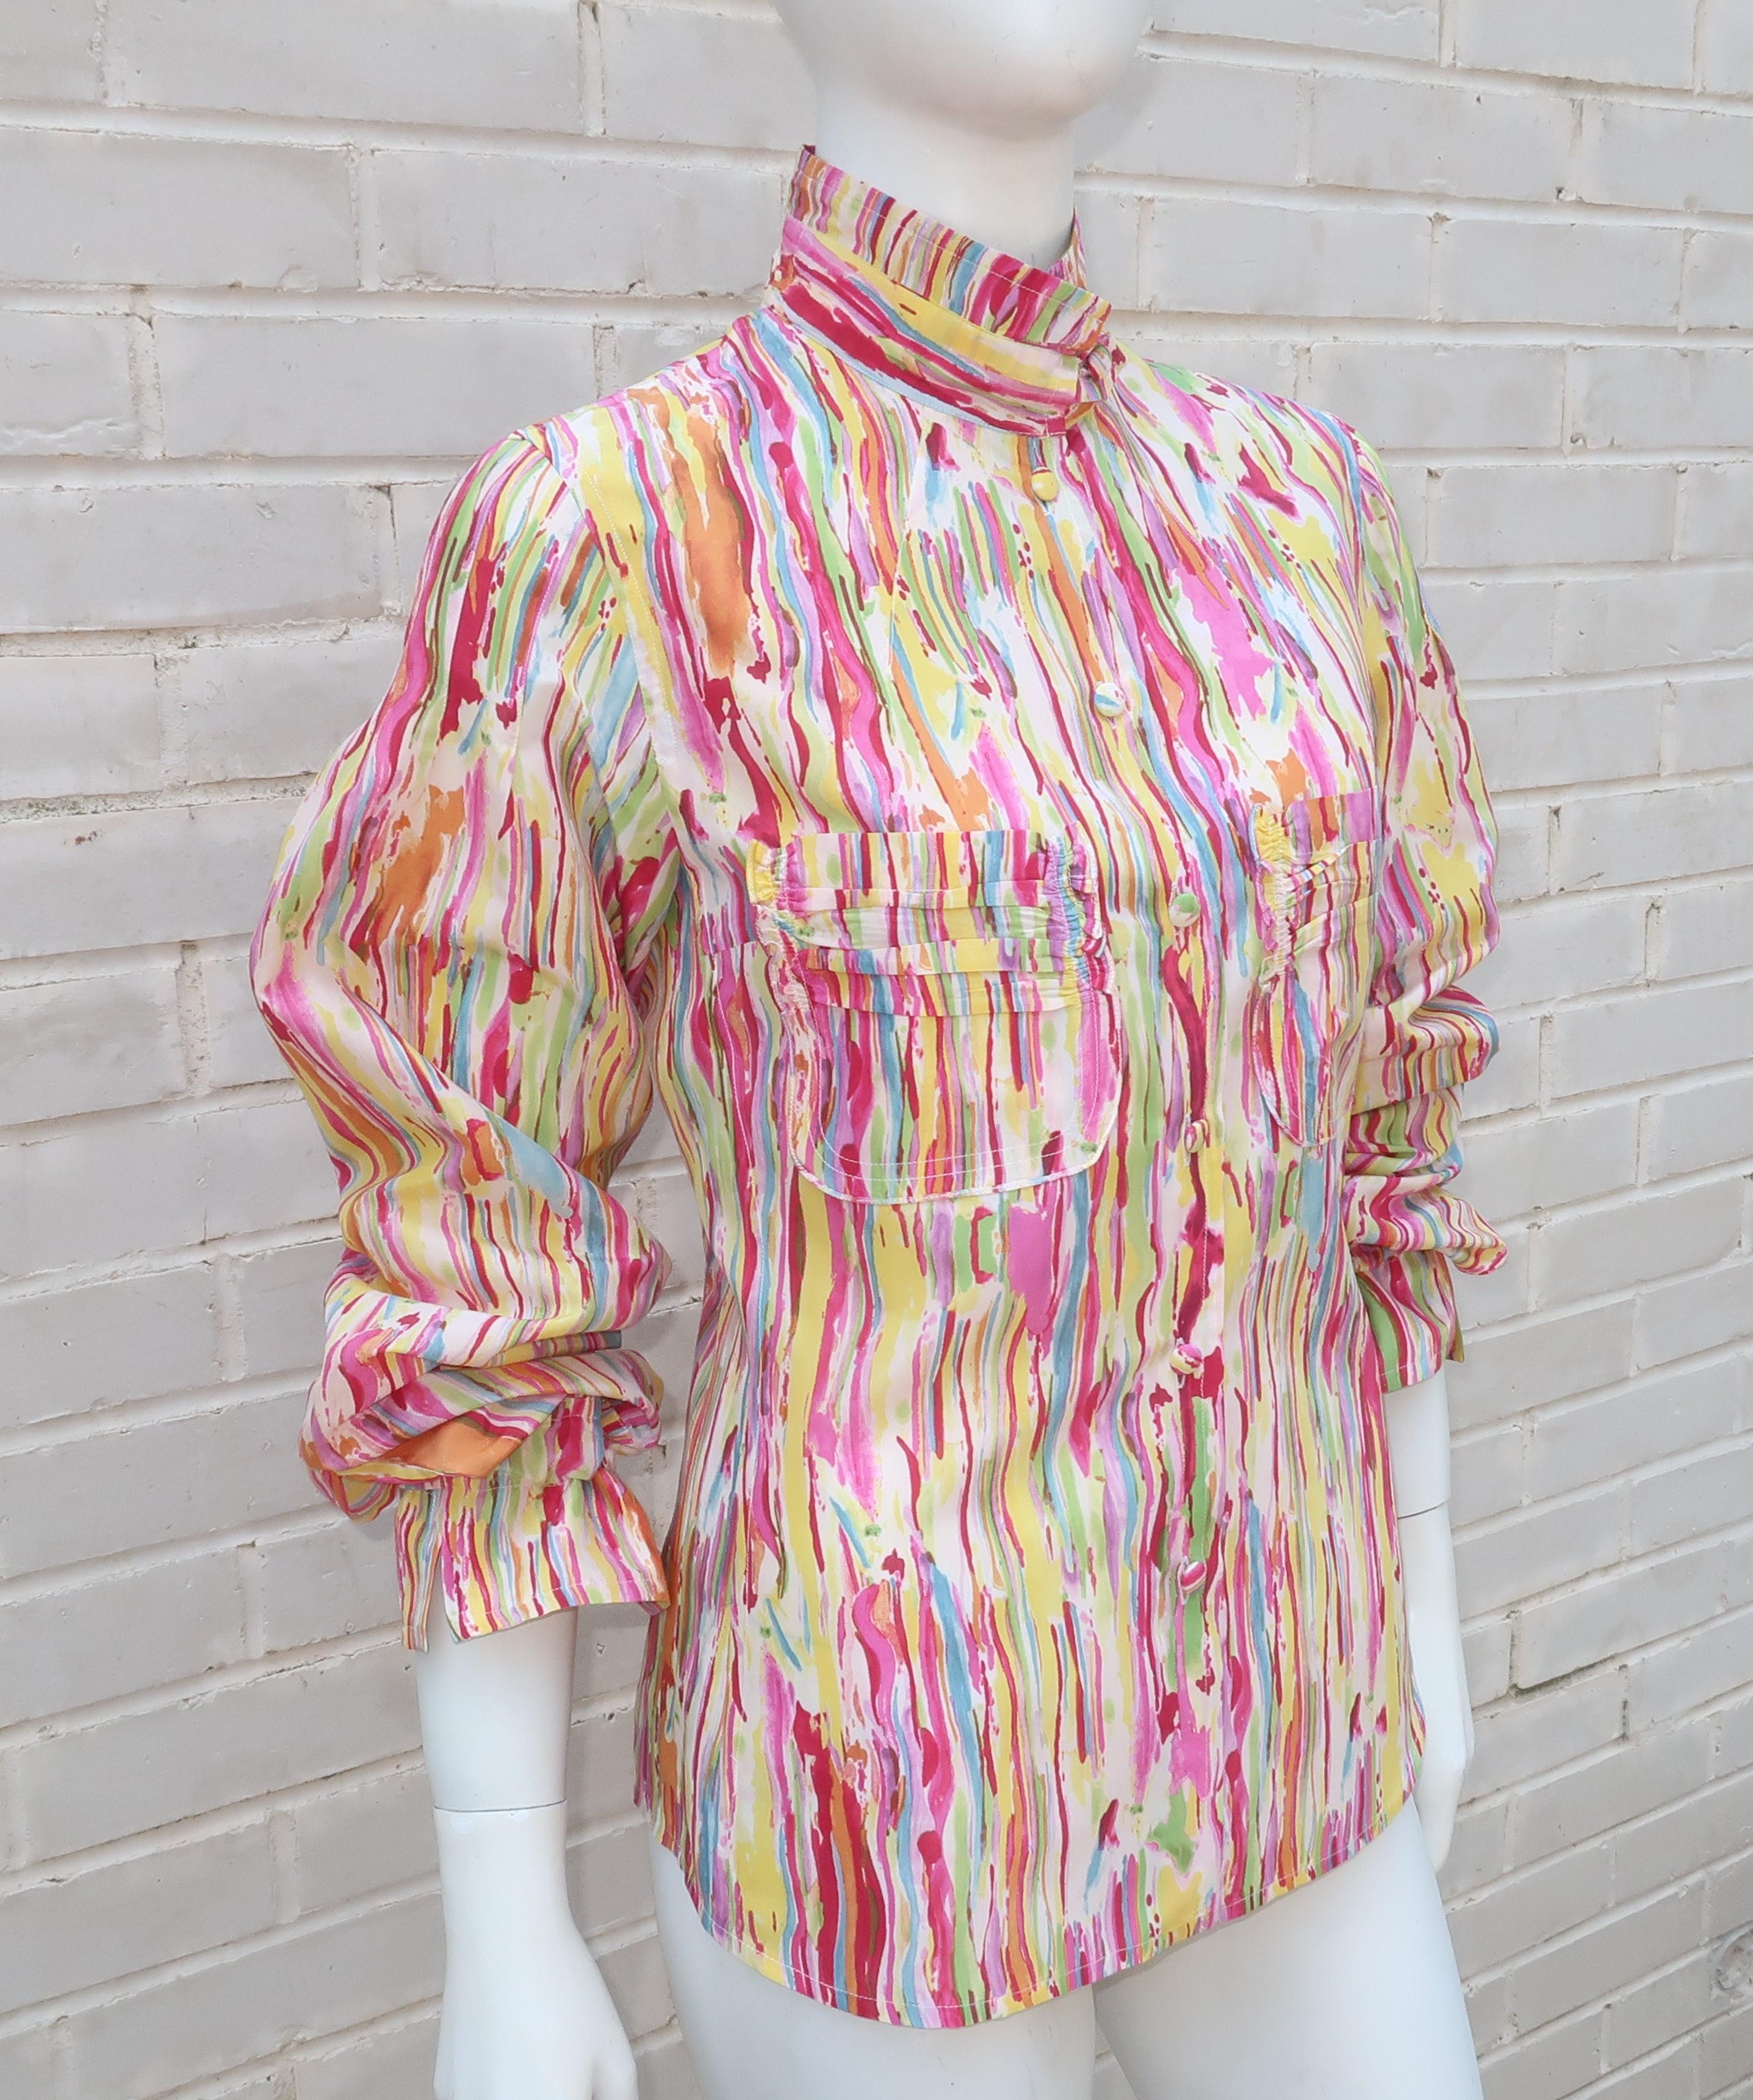 Yves Saint Laurent Silk Multi Color Blouse In Good Condition For Sale In Atlanta, GA